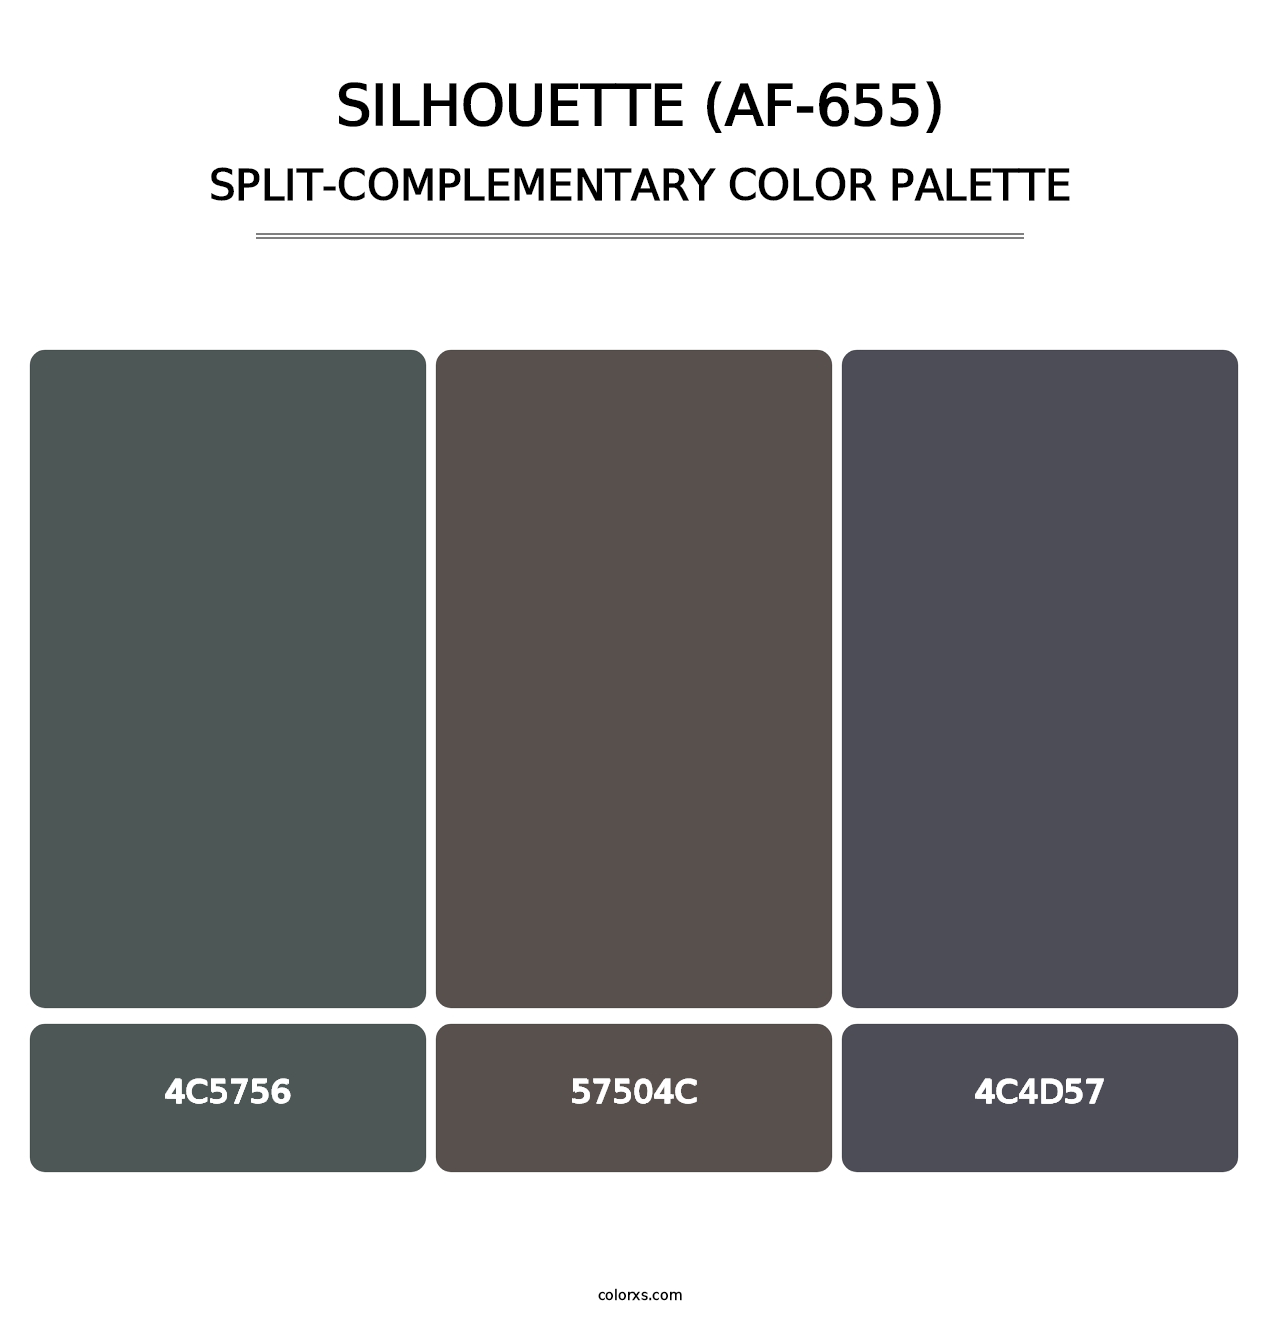 Silhouette (AF-655) - Split-Complementary Color Palette